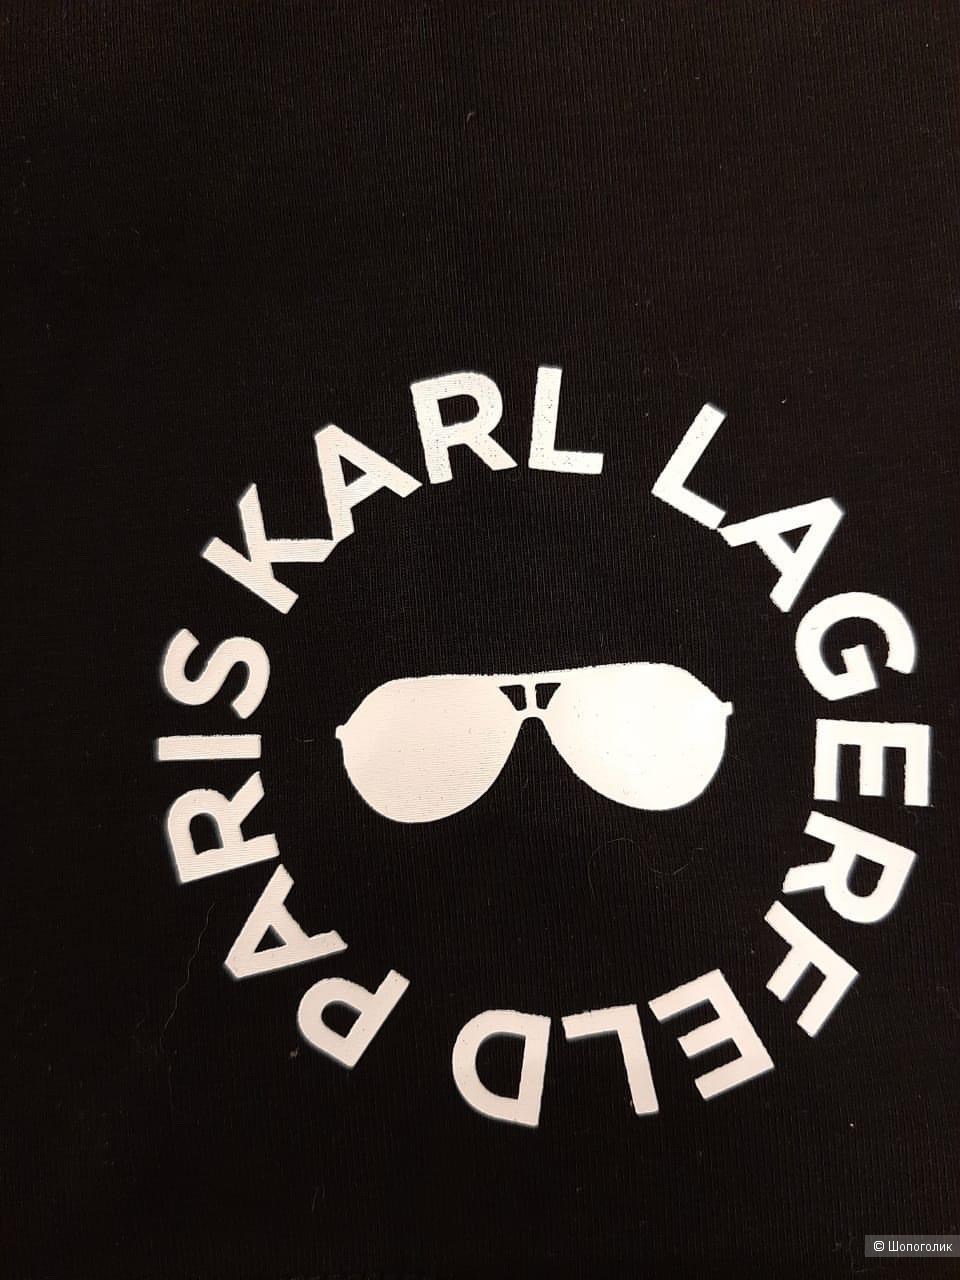 Леггинсы Karl Lagerfeld, разм. US M